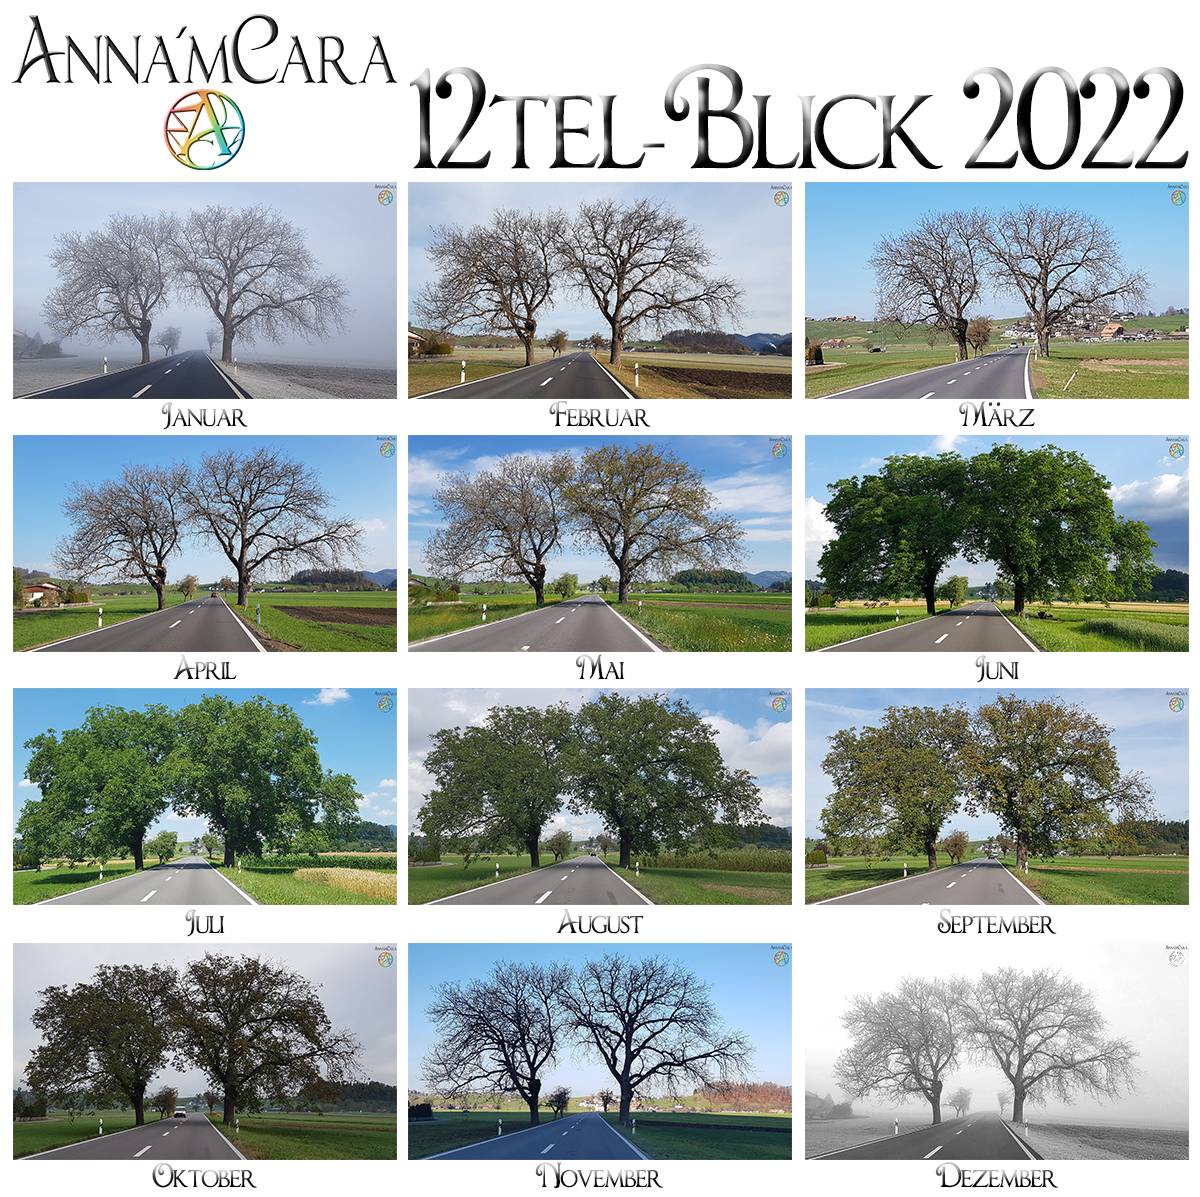 Anna'mCara-Blog - 12tel-Blick - Jahresblick Baumfreunde - November 2022